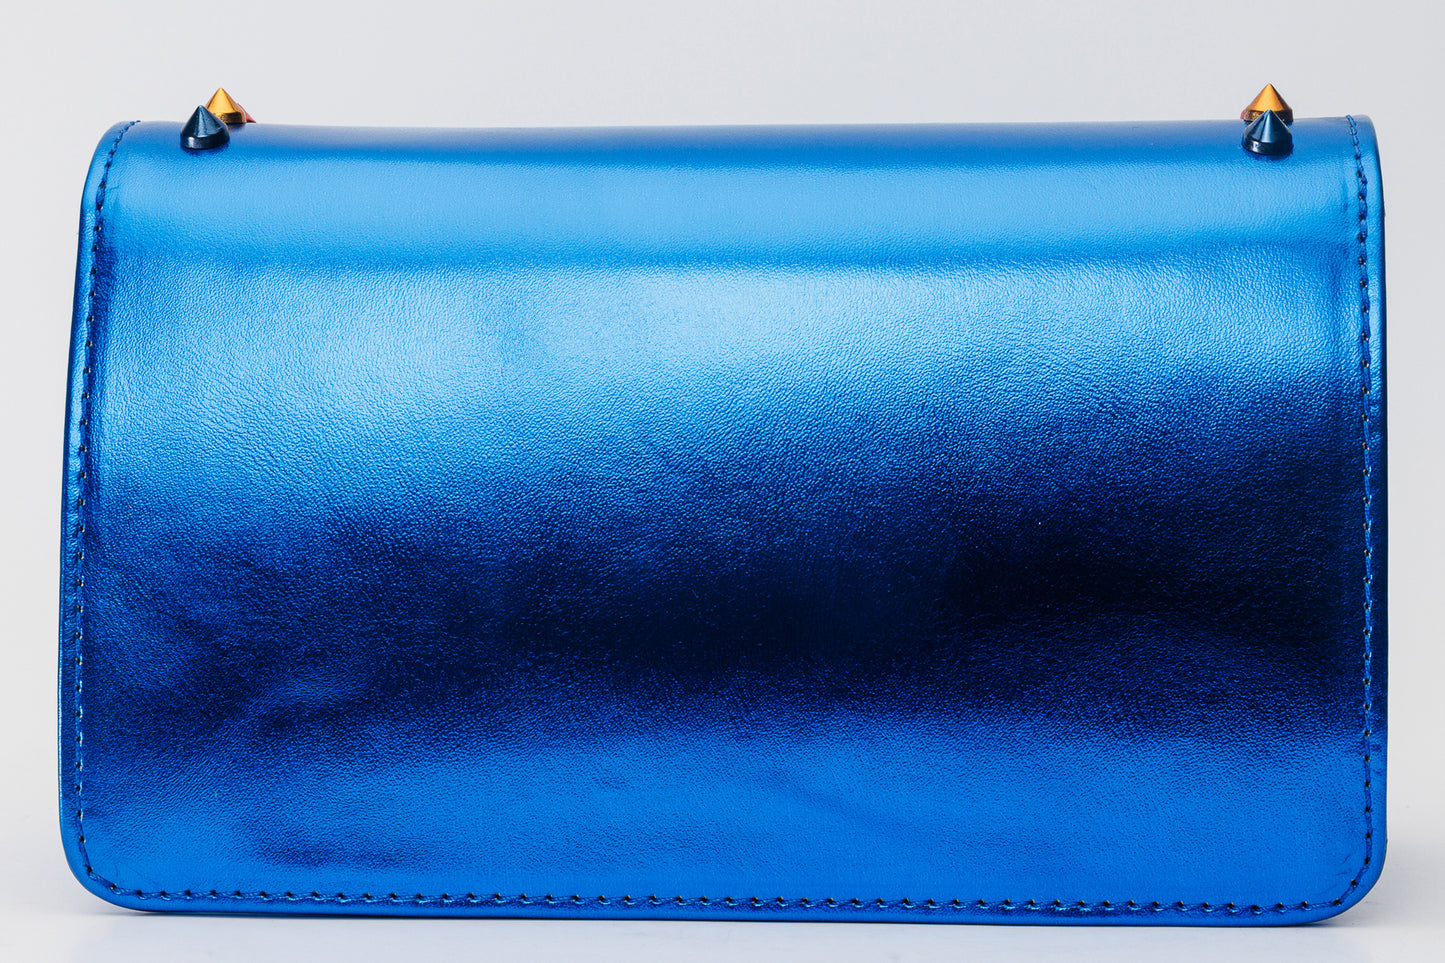 The Caris Sax Blue Leather Handbag